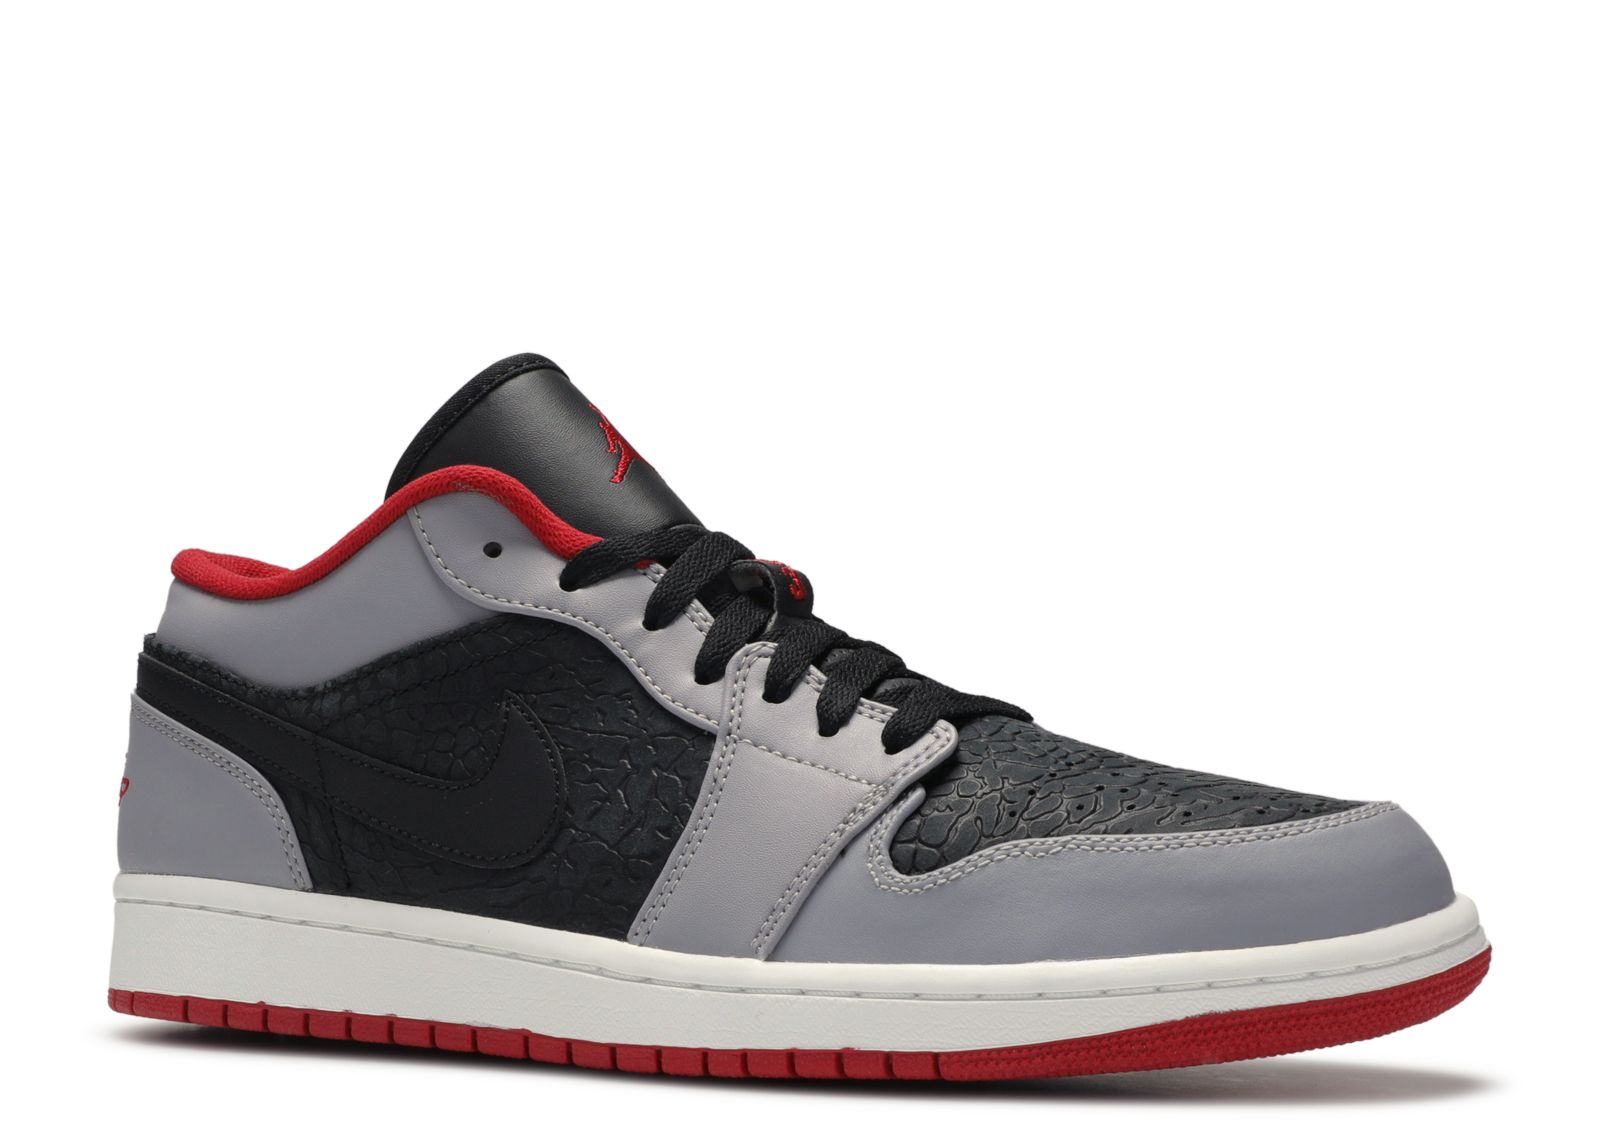 Air Jordan 1 Retro Low 'Cement Grey Black' - Air Jordan - 553558 004 - black/gym red-cement grey Flight Club